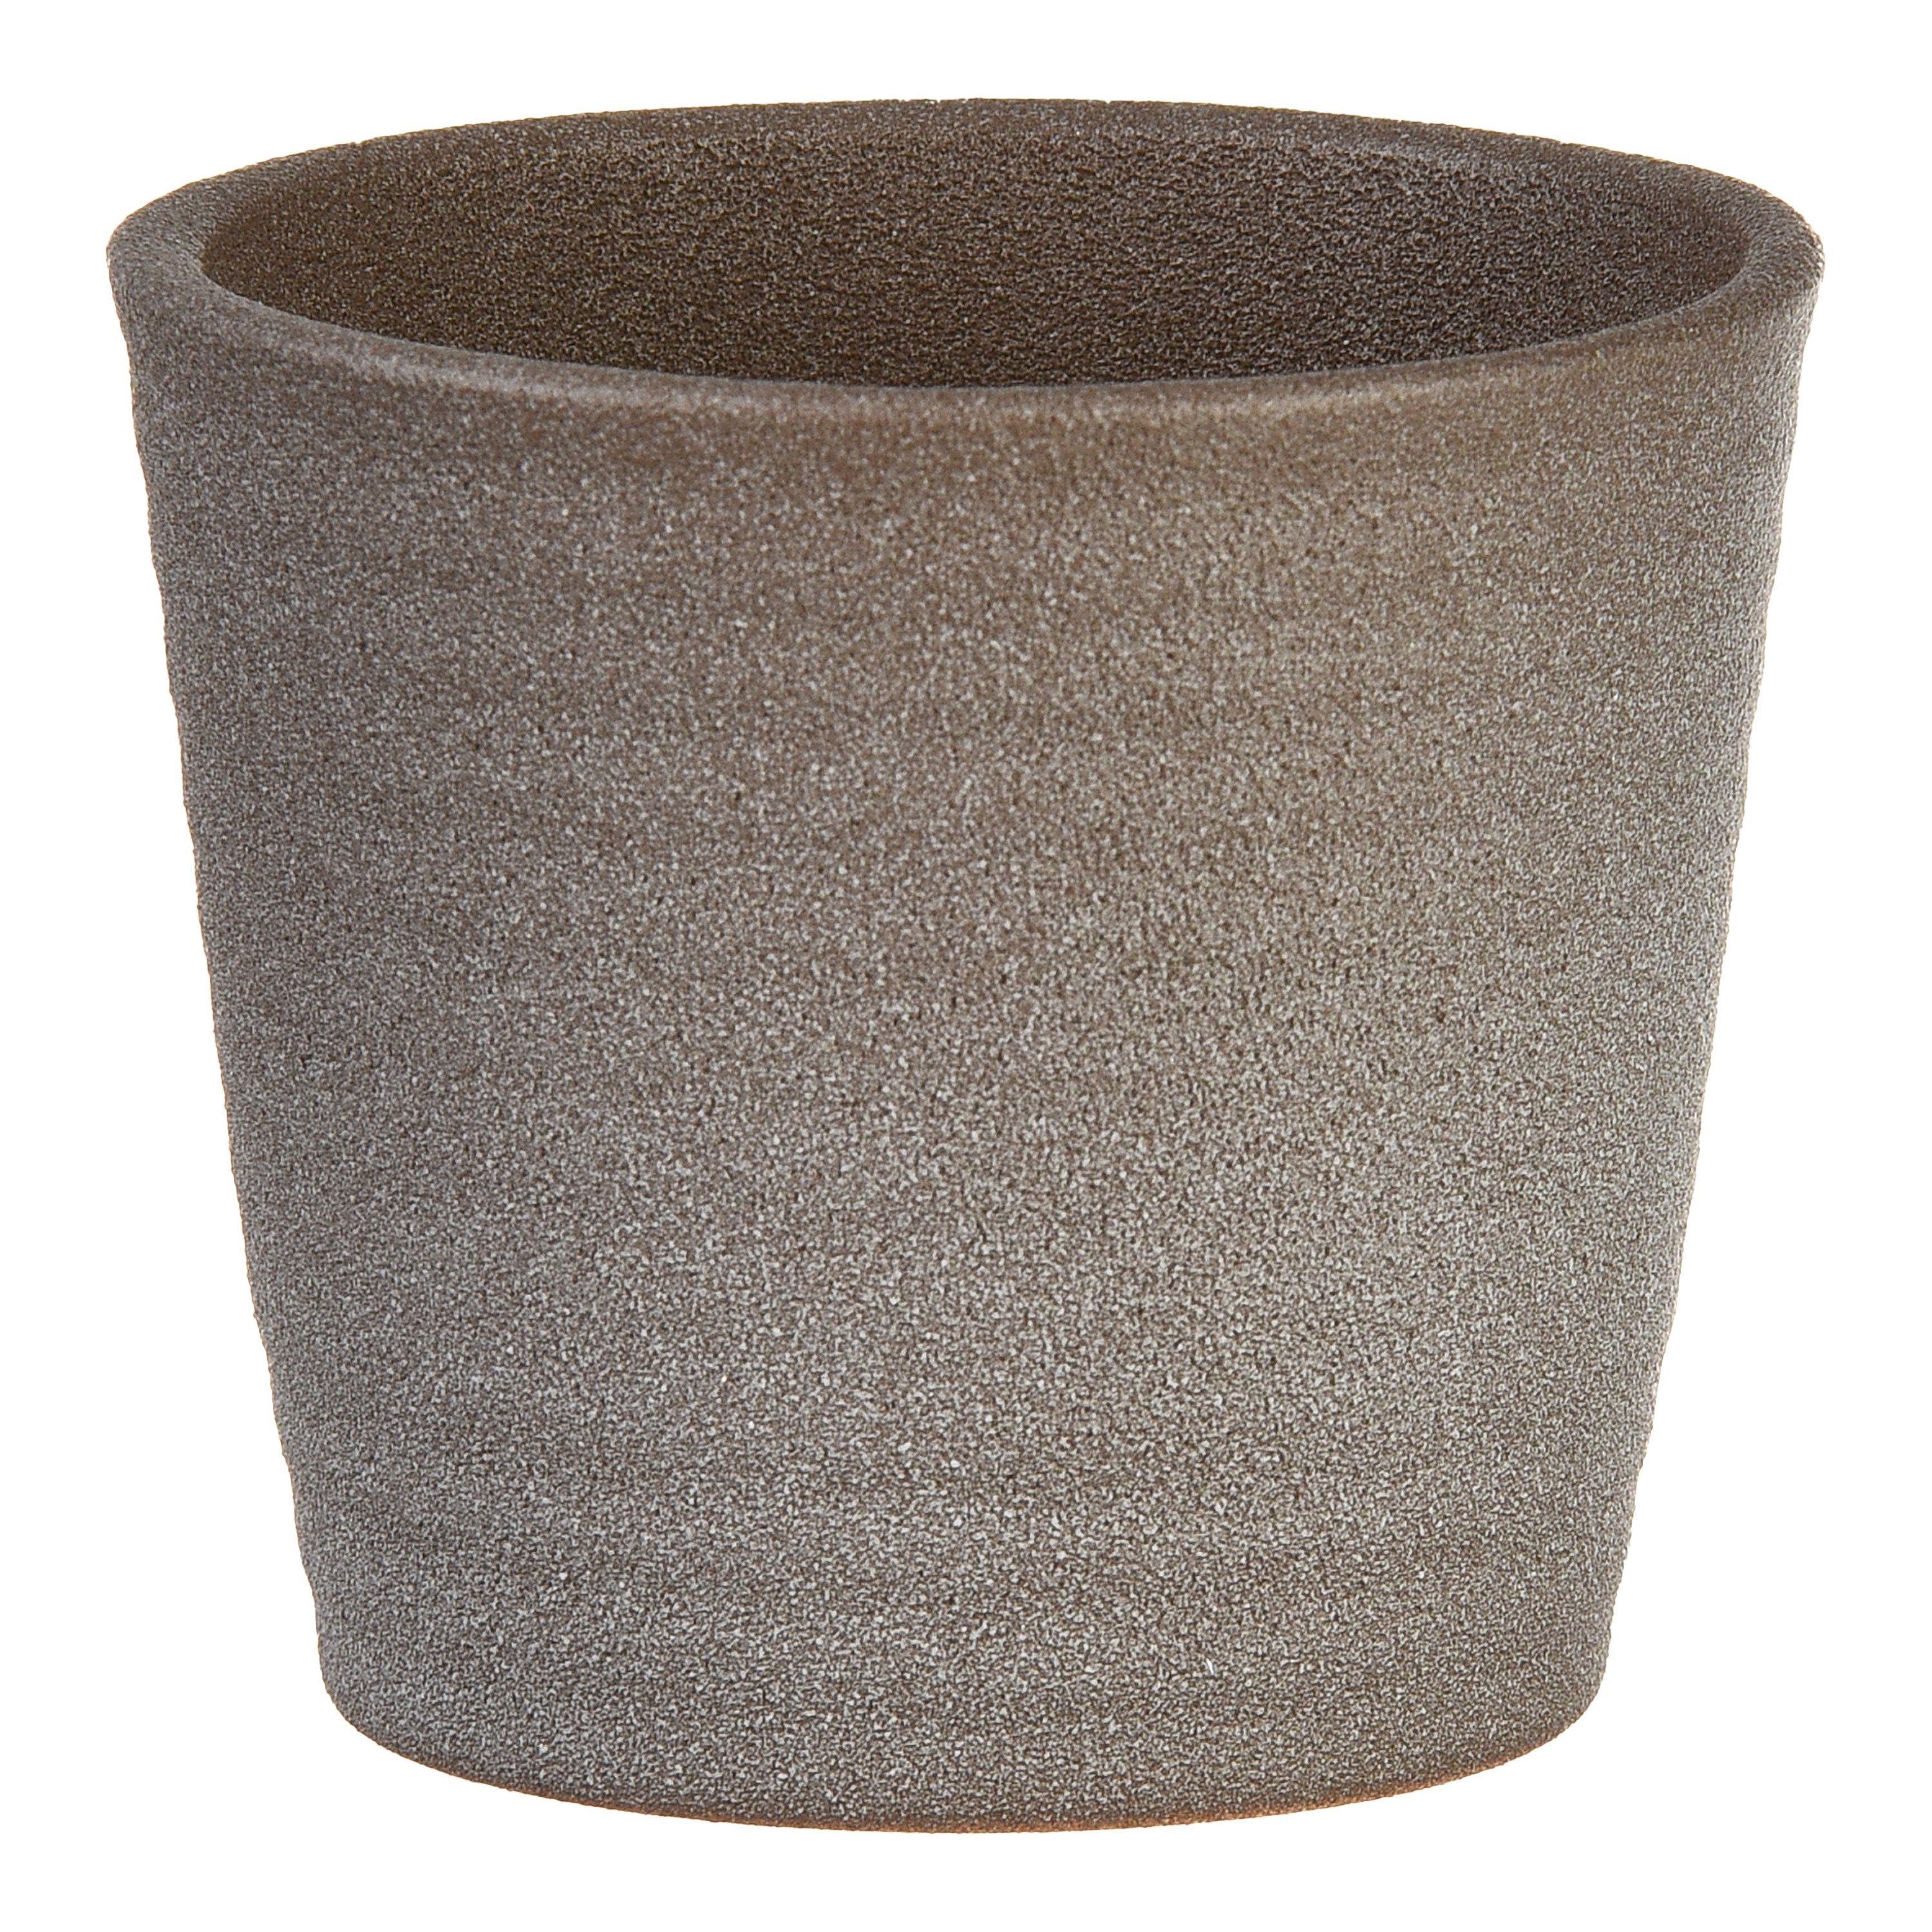 Übertopf Ø H aus Keramik, Übertopf 7 Zentimeter Übertopf), Zentimeter, 1 Stone Depot Grau (Packung, Nature 6